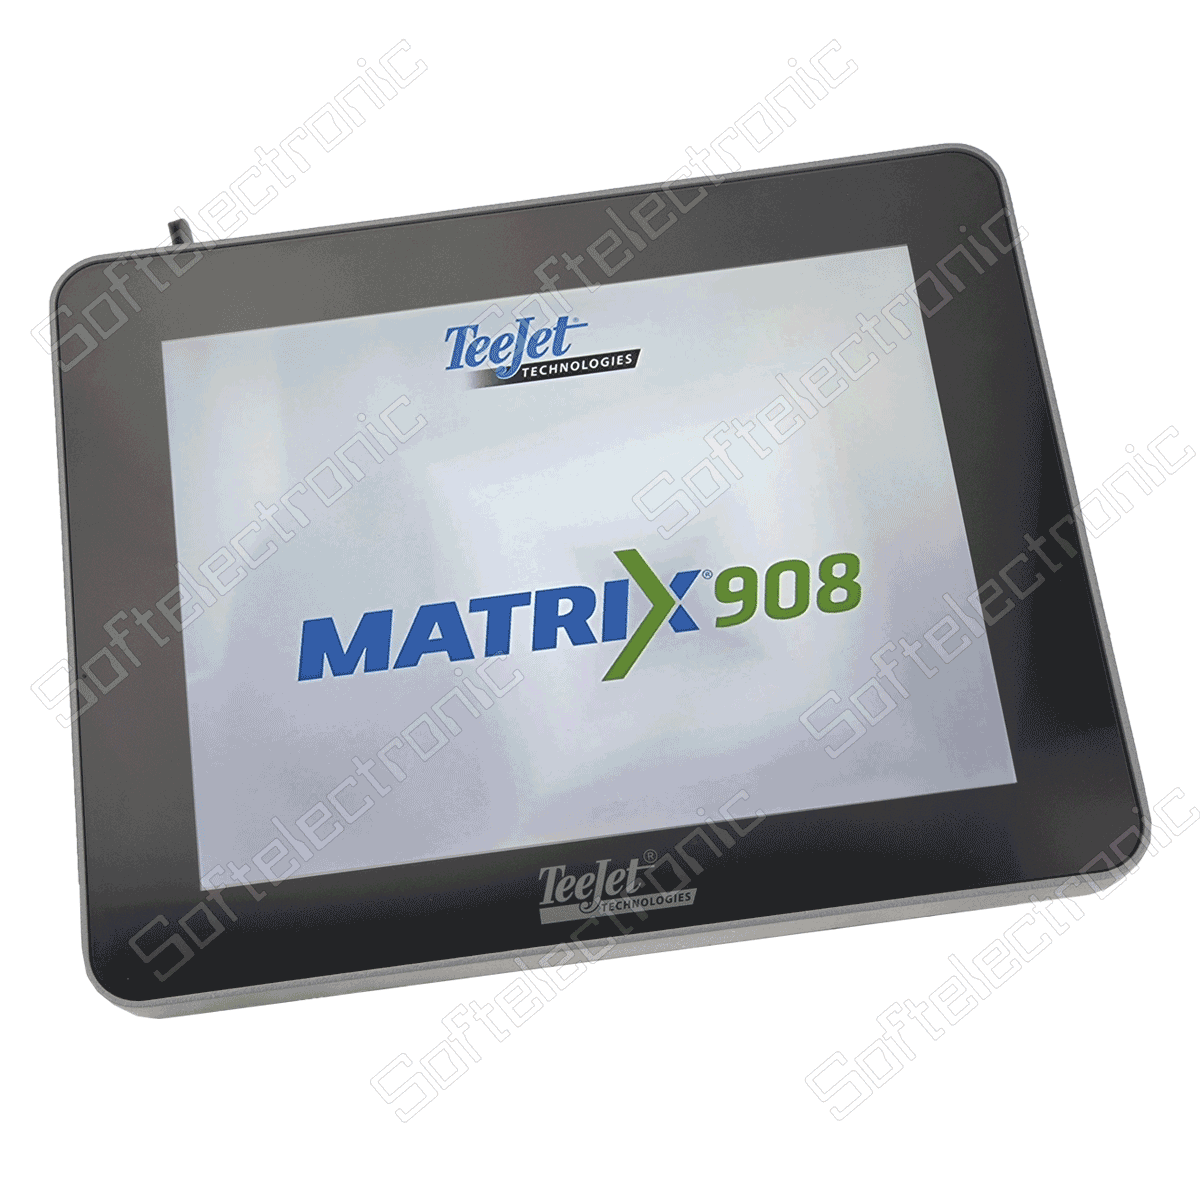 Matrix 908 GPS Sisteminin Onarımı